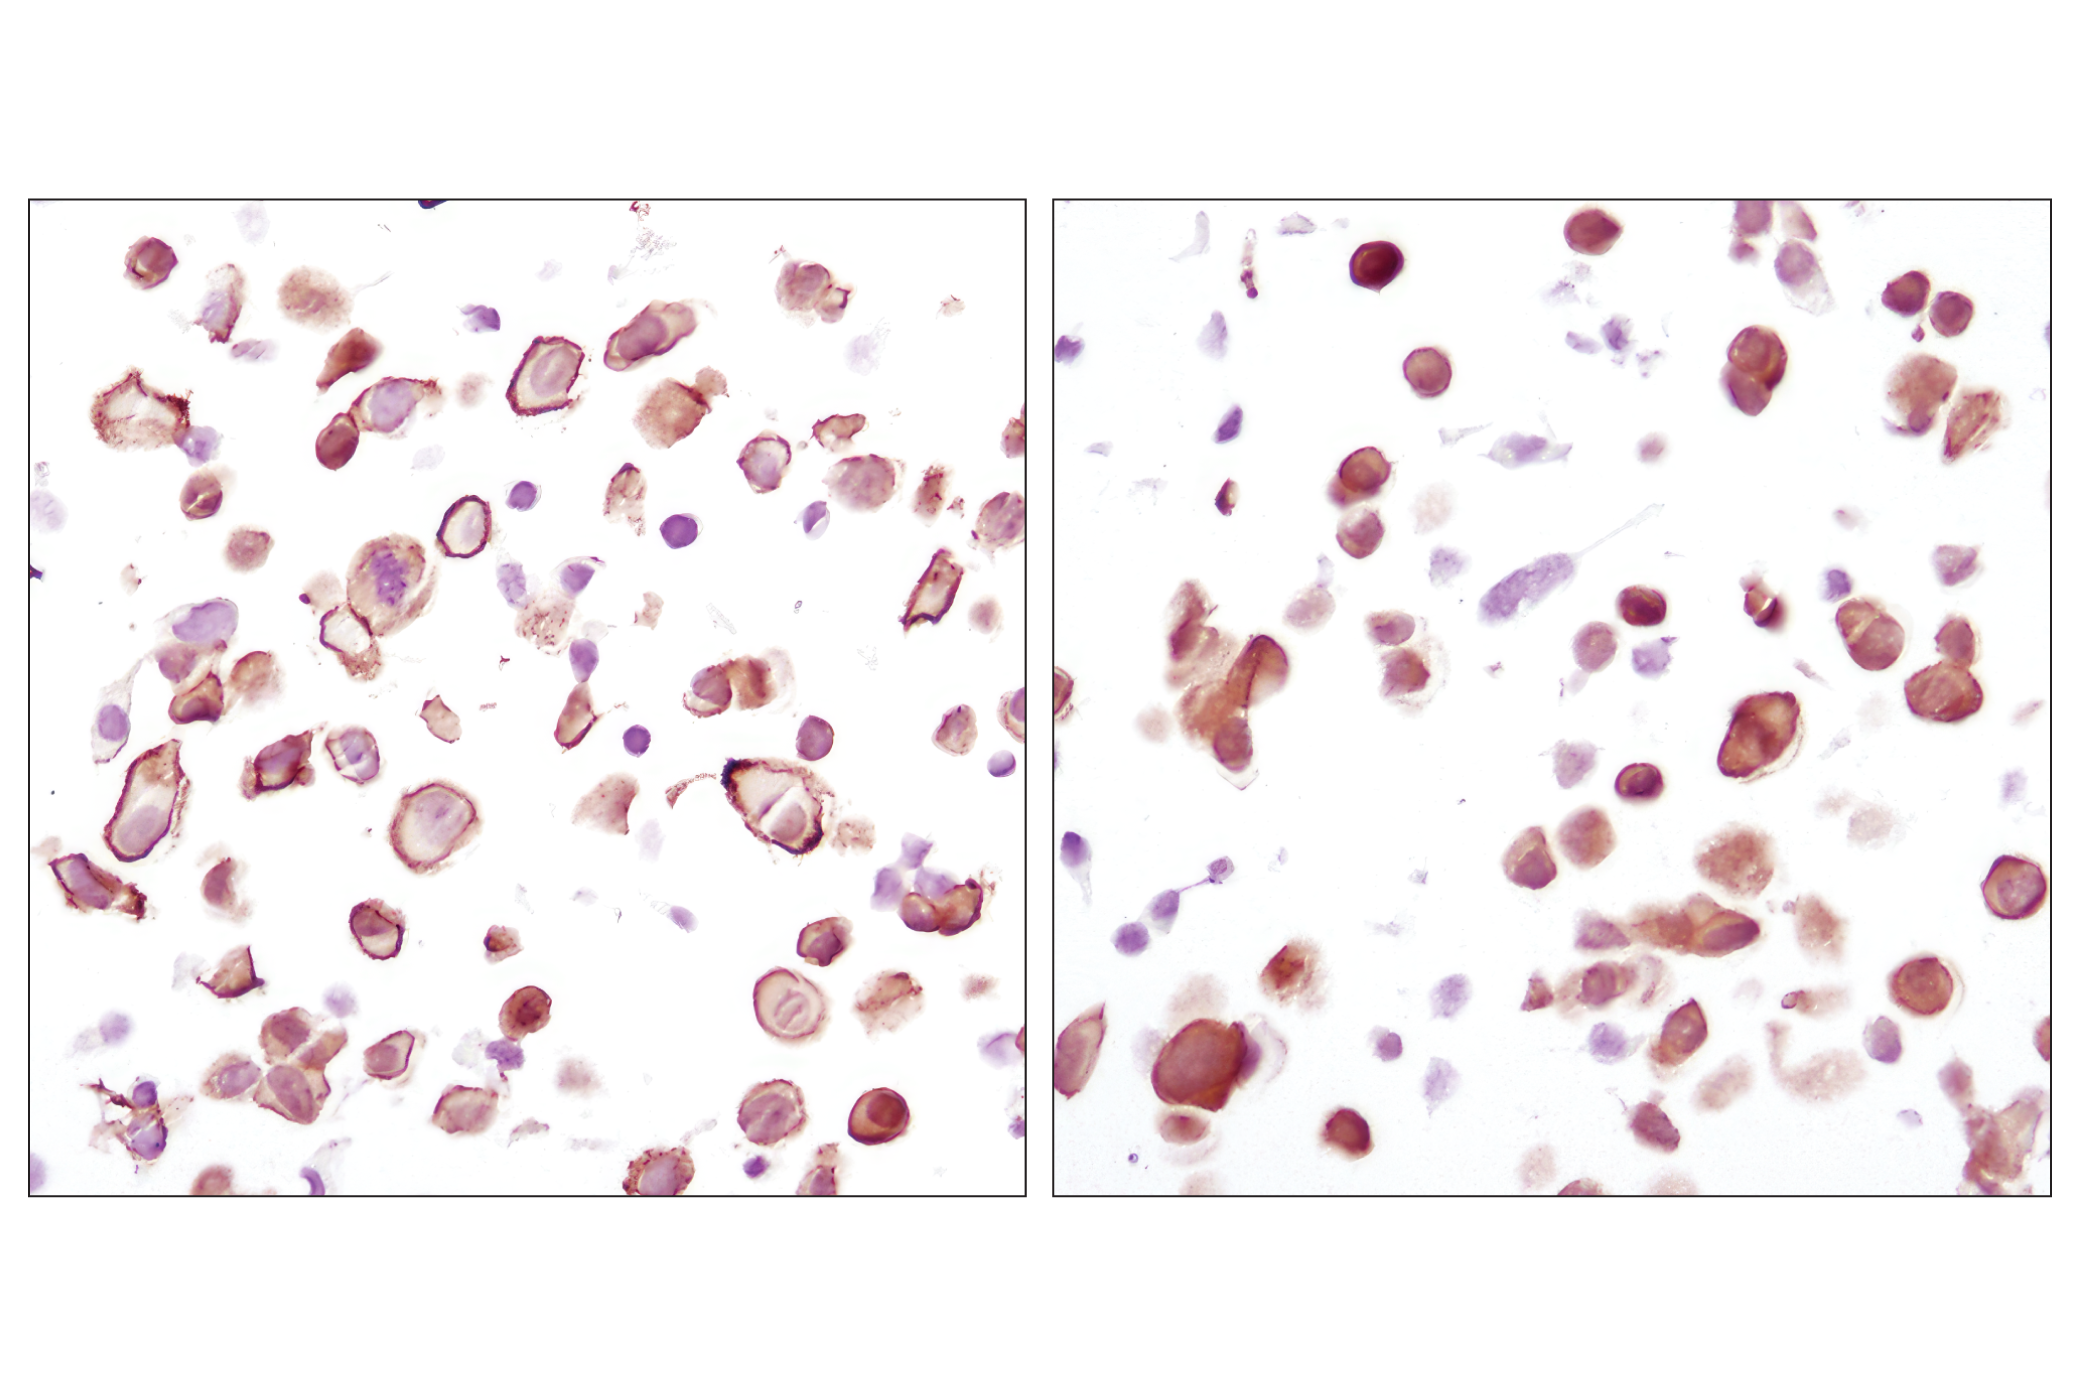  Image 23: Phospho-Akt Isoform Antibody Sampler Kit